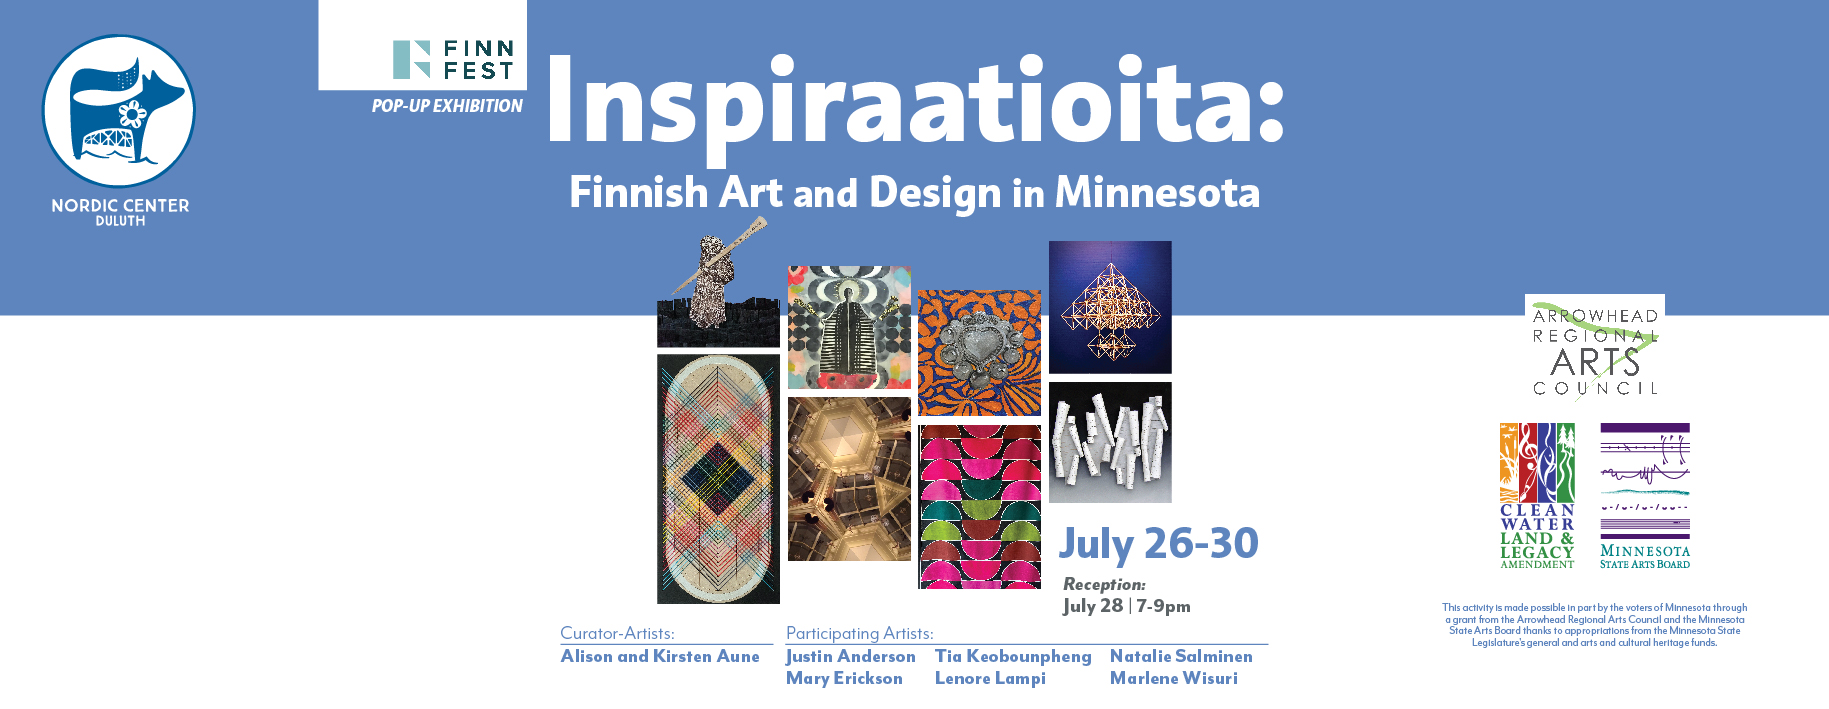 Nordic Center Pop Up Exhibition Inspiraatioita: Finnish Art and Design in Minnesota as part of FinnFest